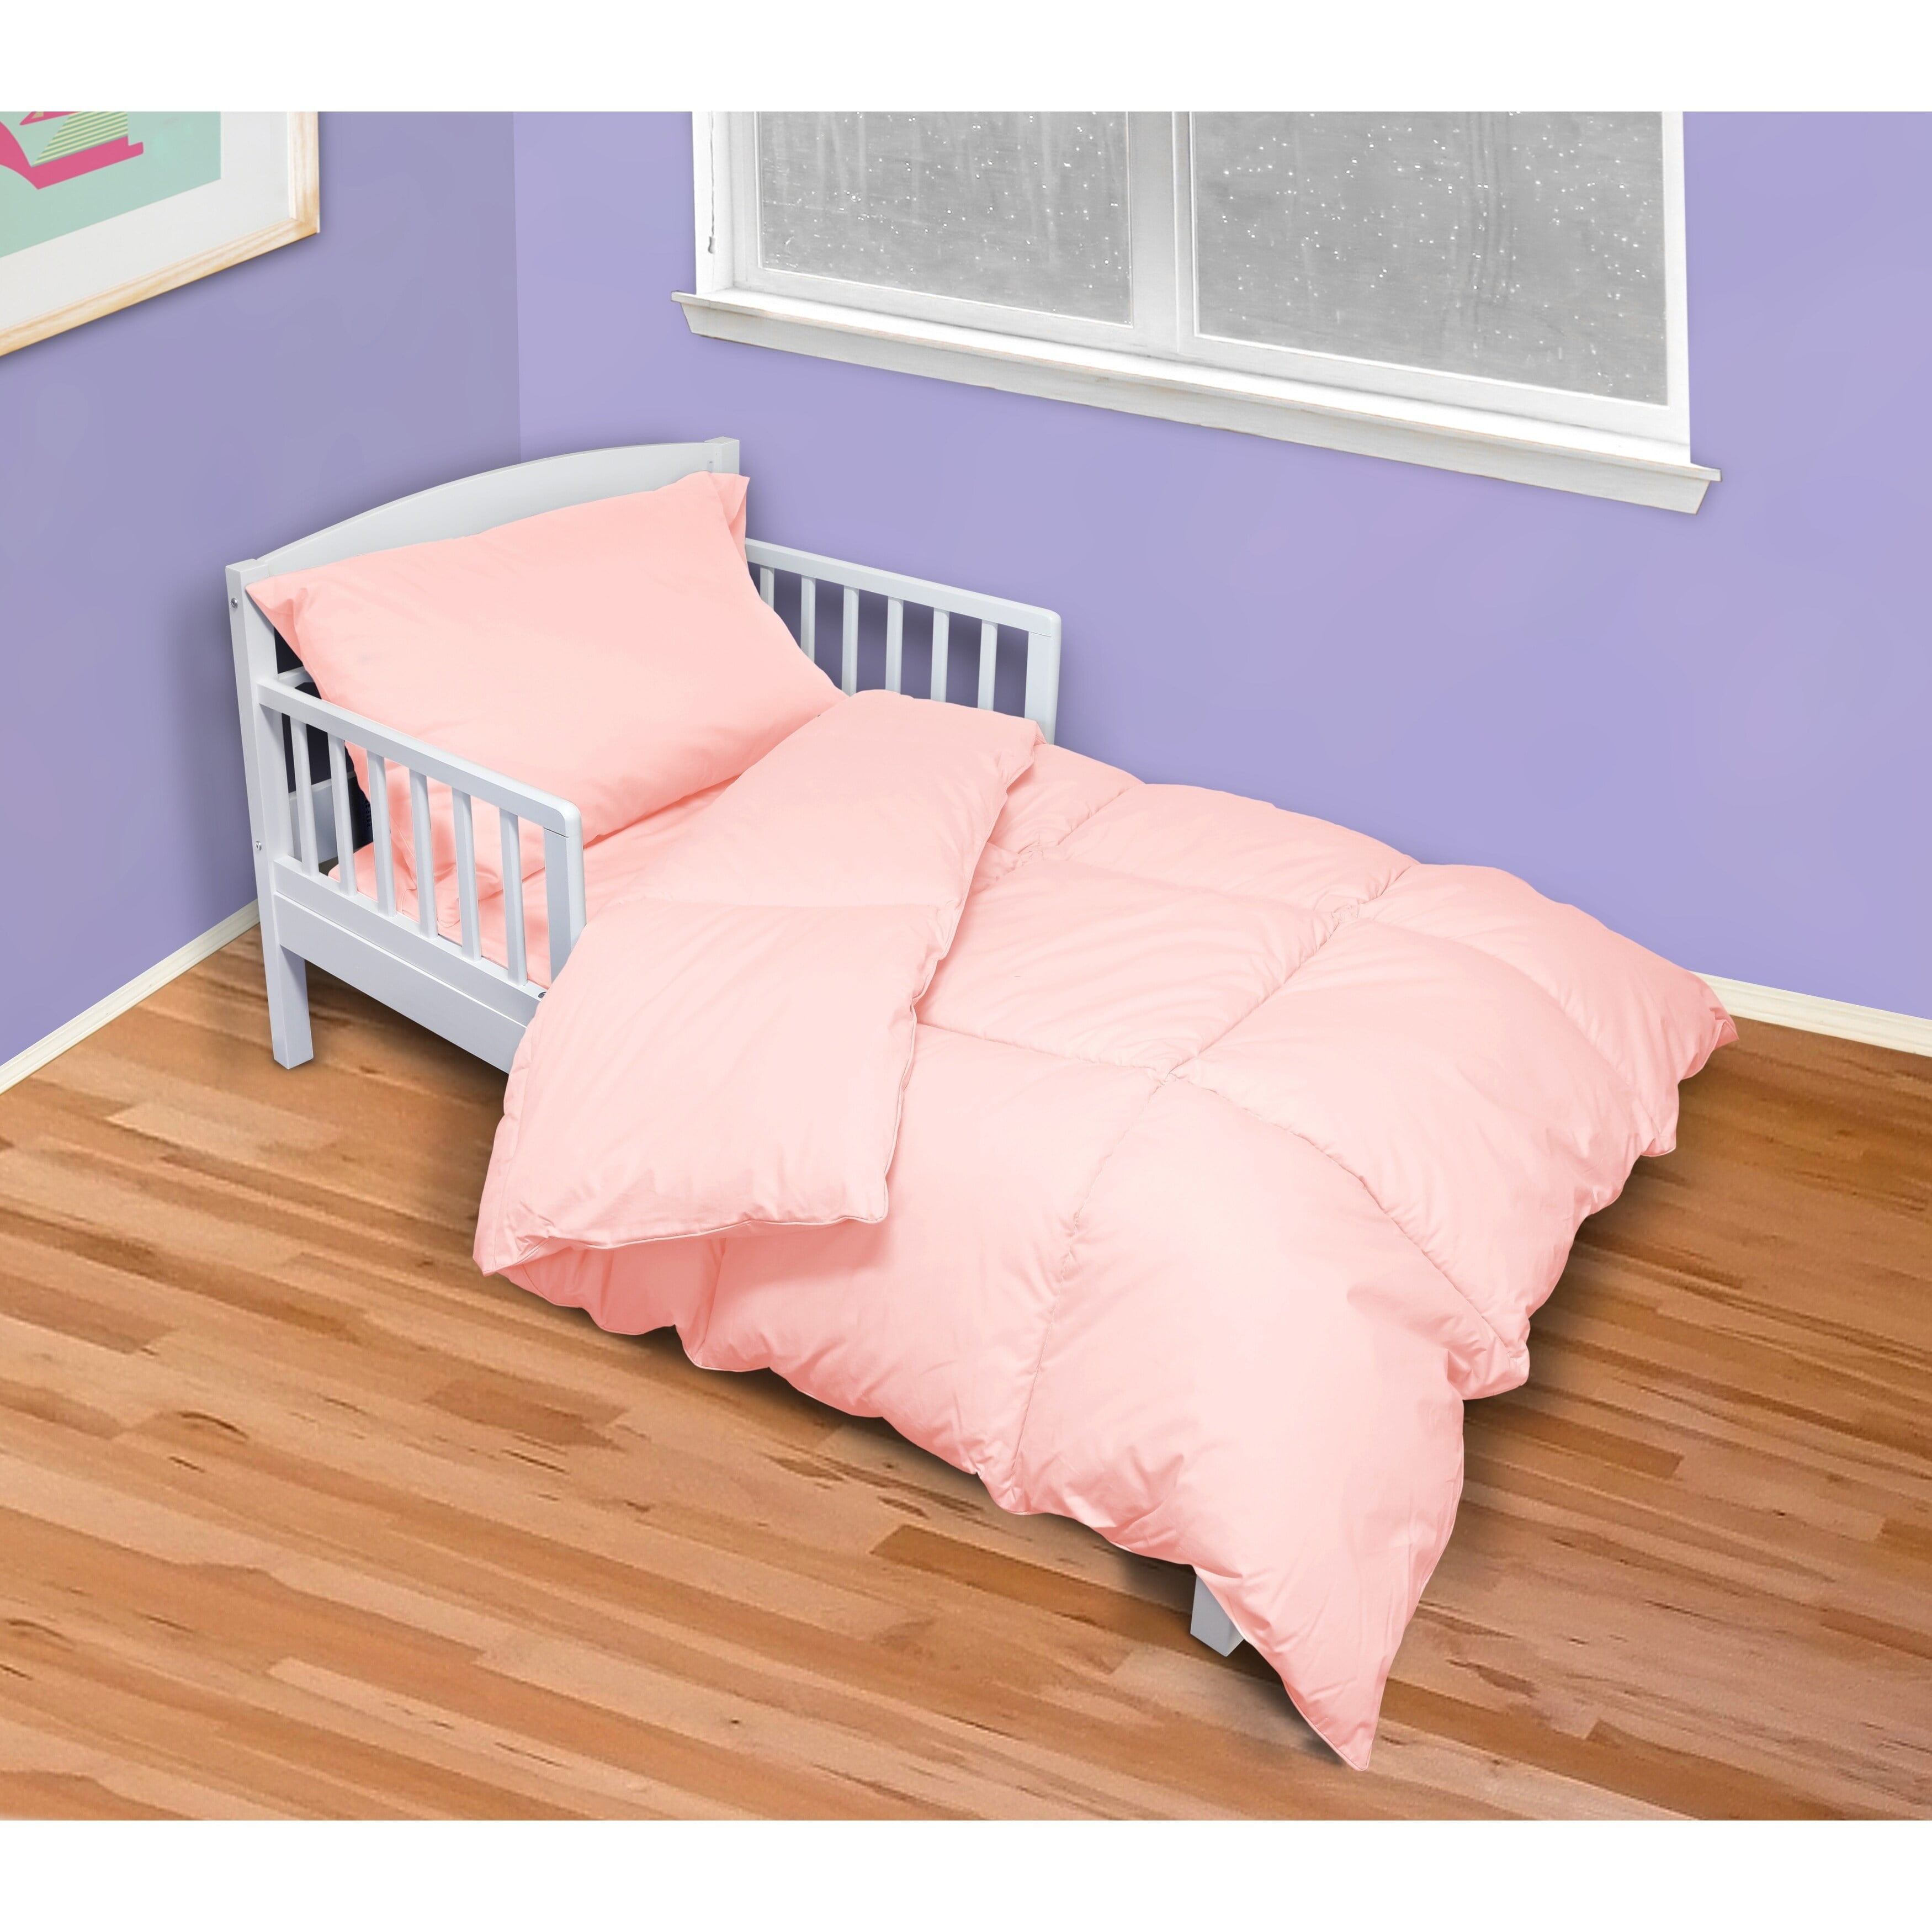 4 Piece Cotton Toddler Comforter Set 